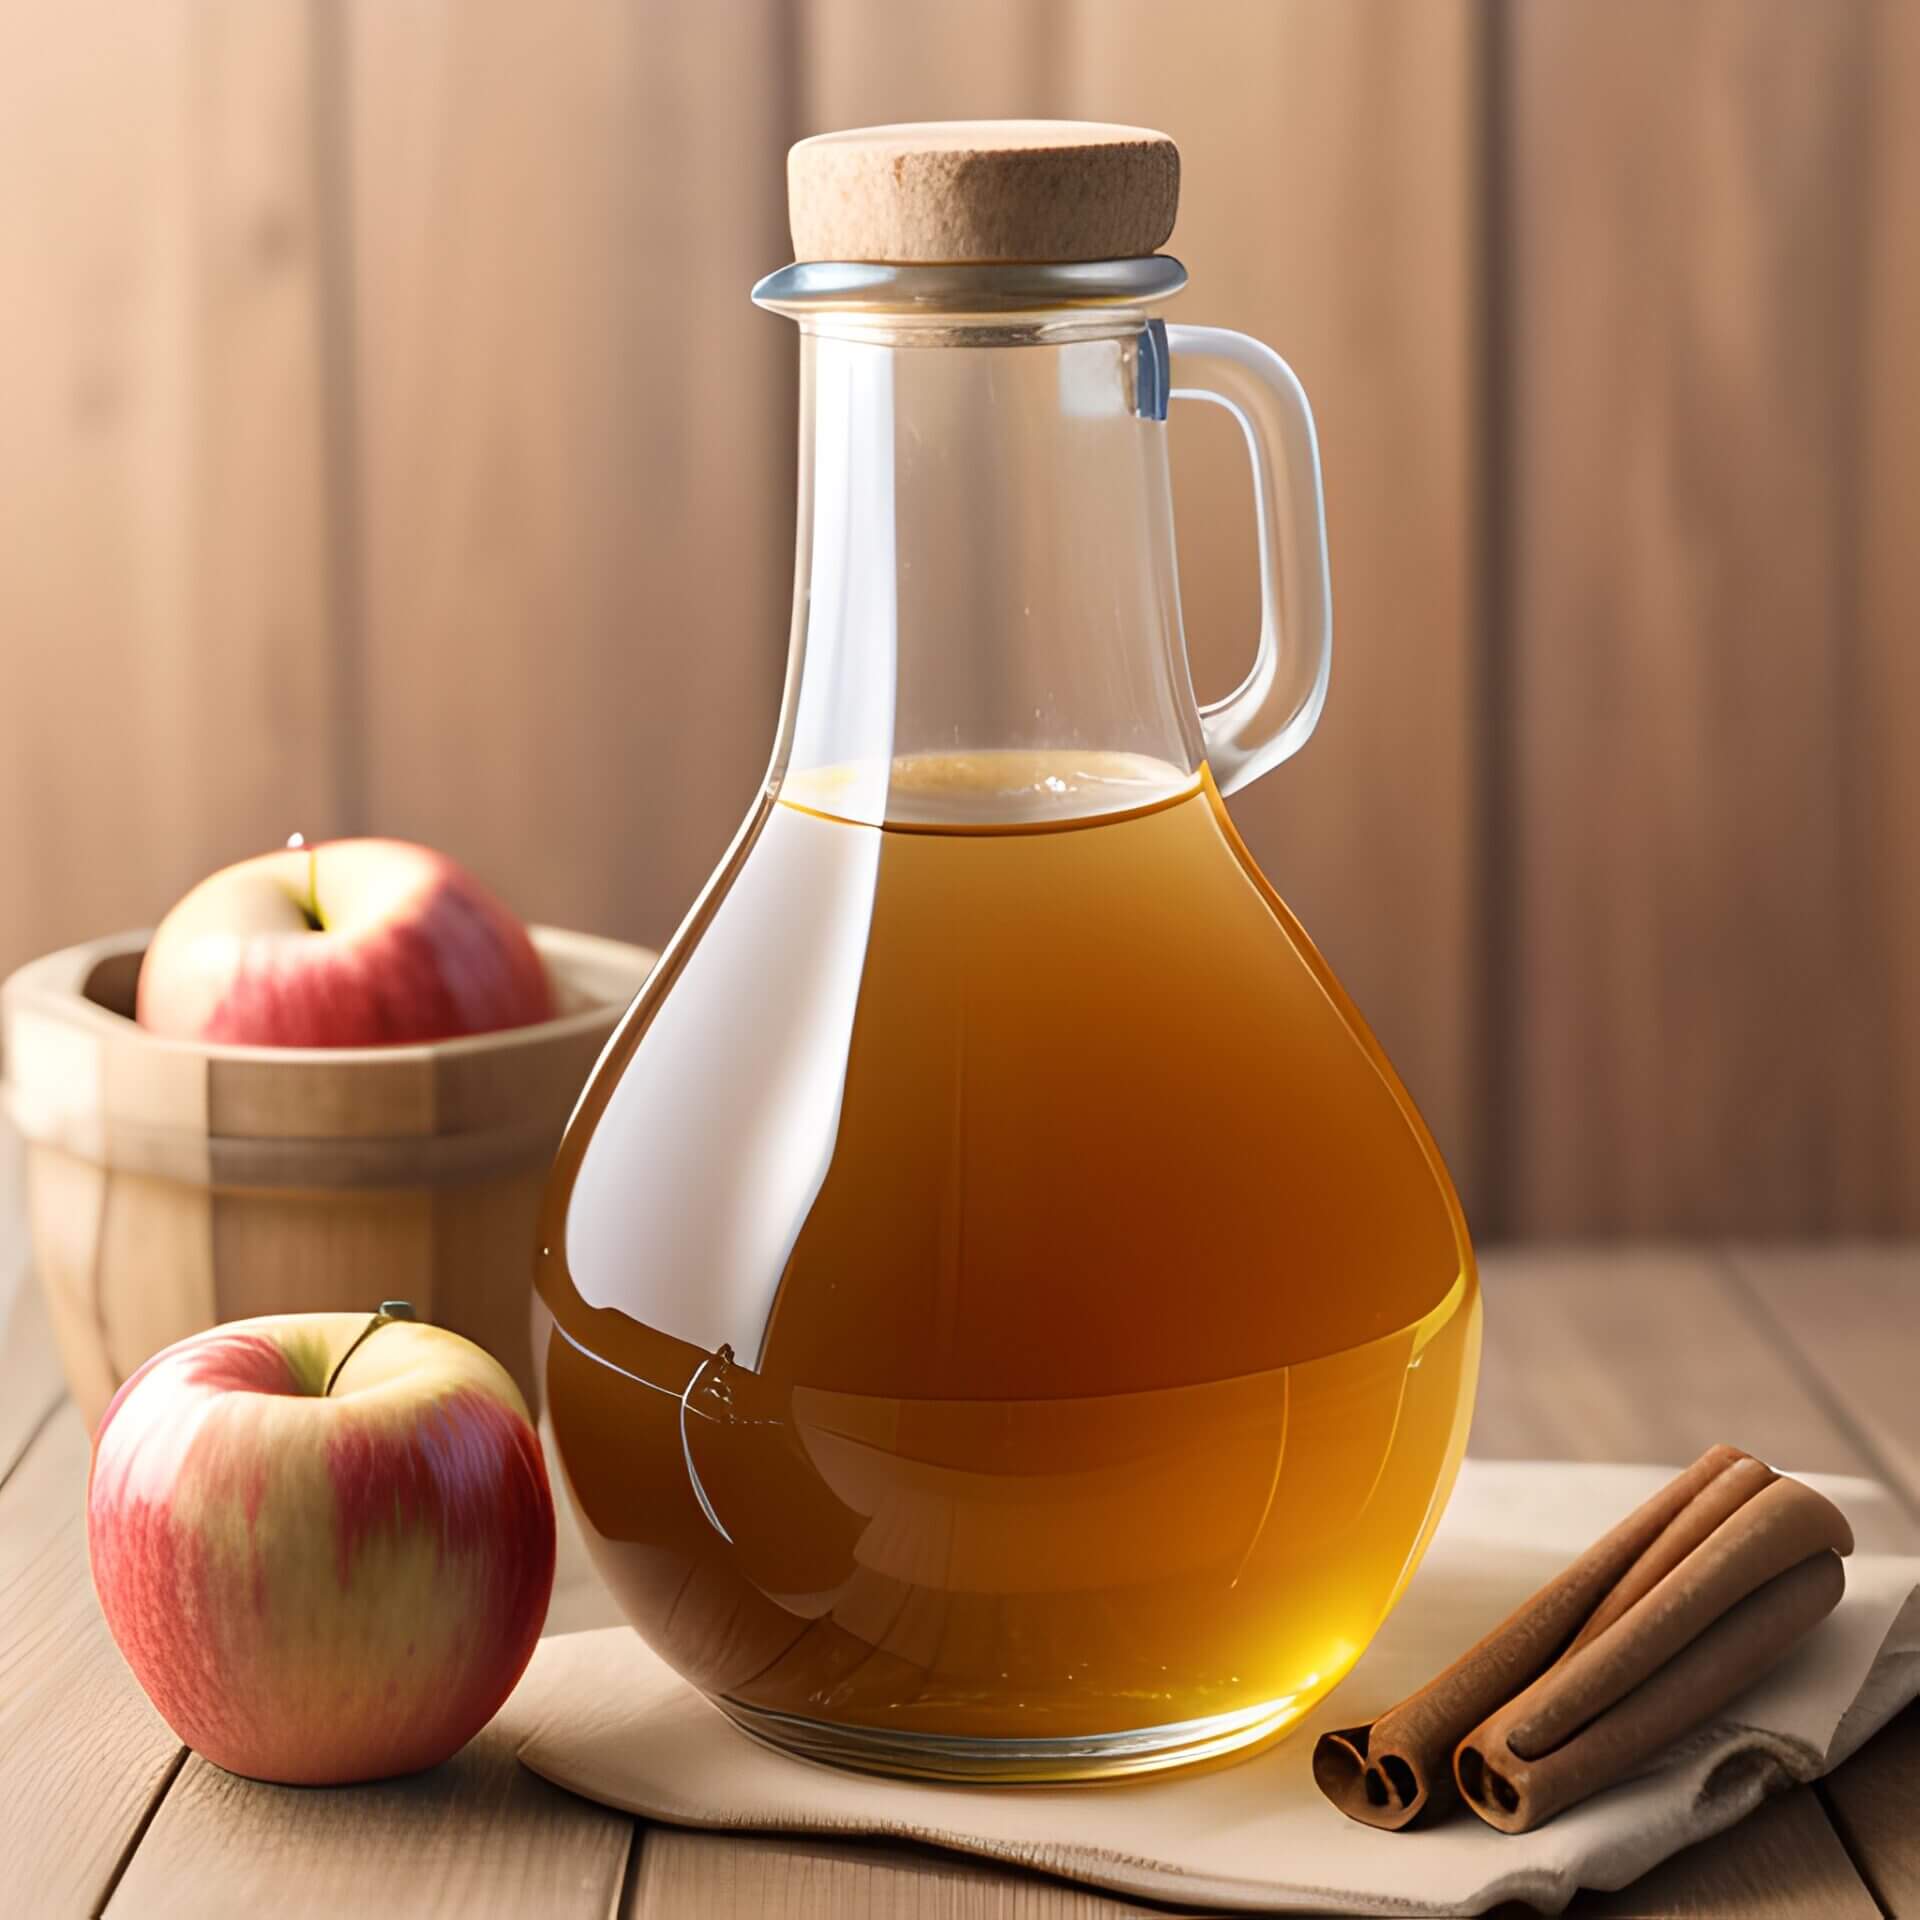 does apple cider vinegar break a fast?